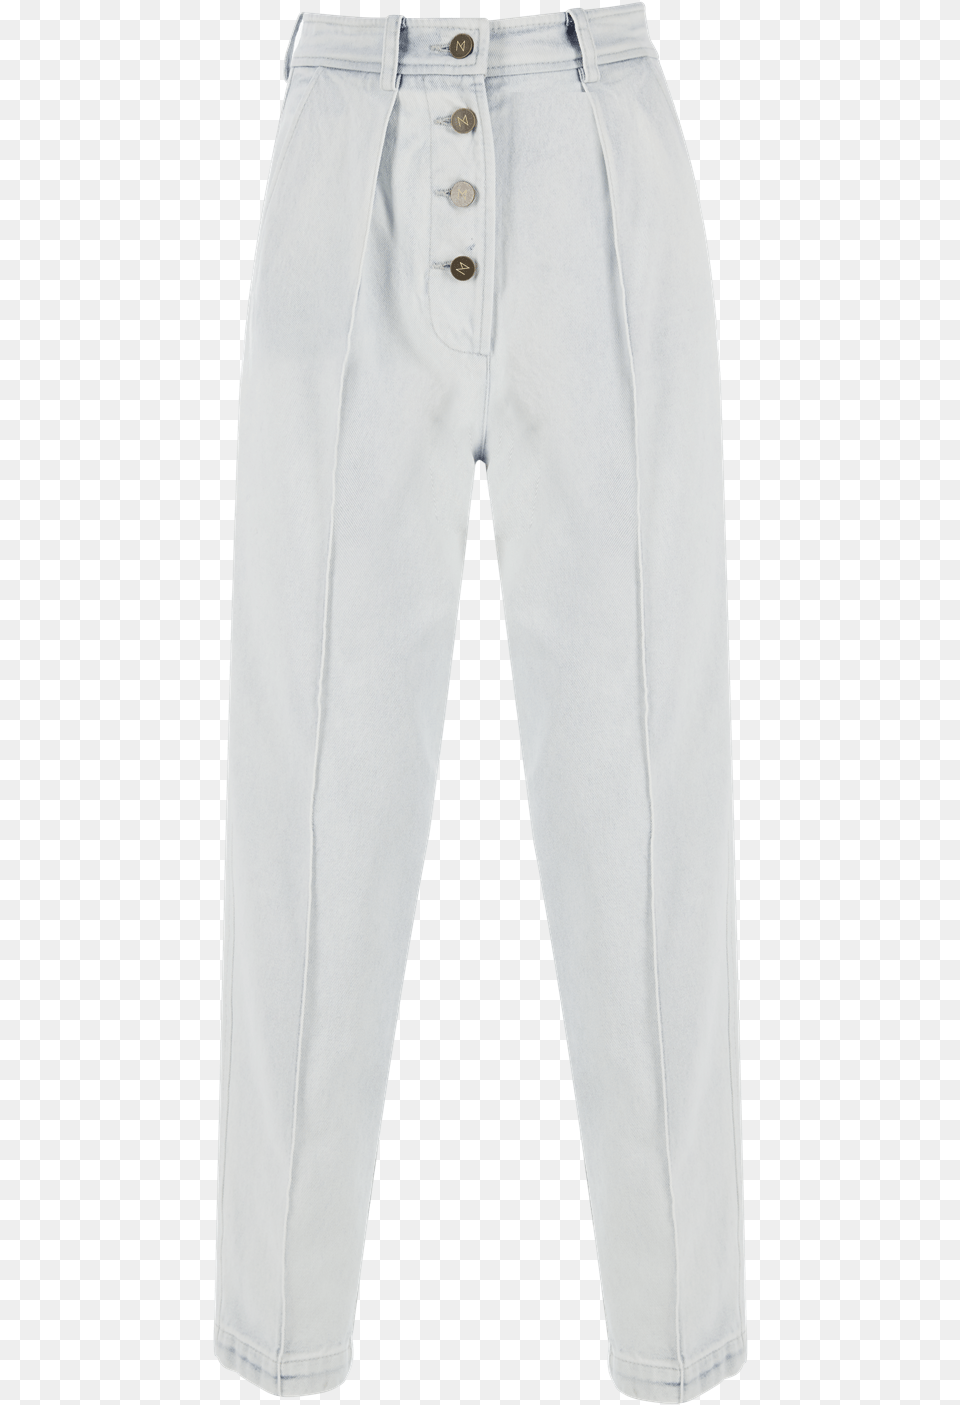 Pocket, Clothing, Pants, Coat, Jeans Png Image